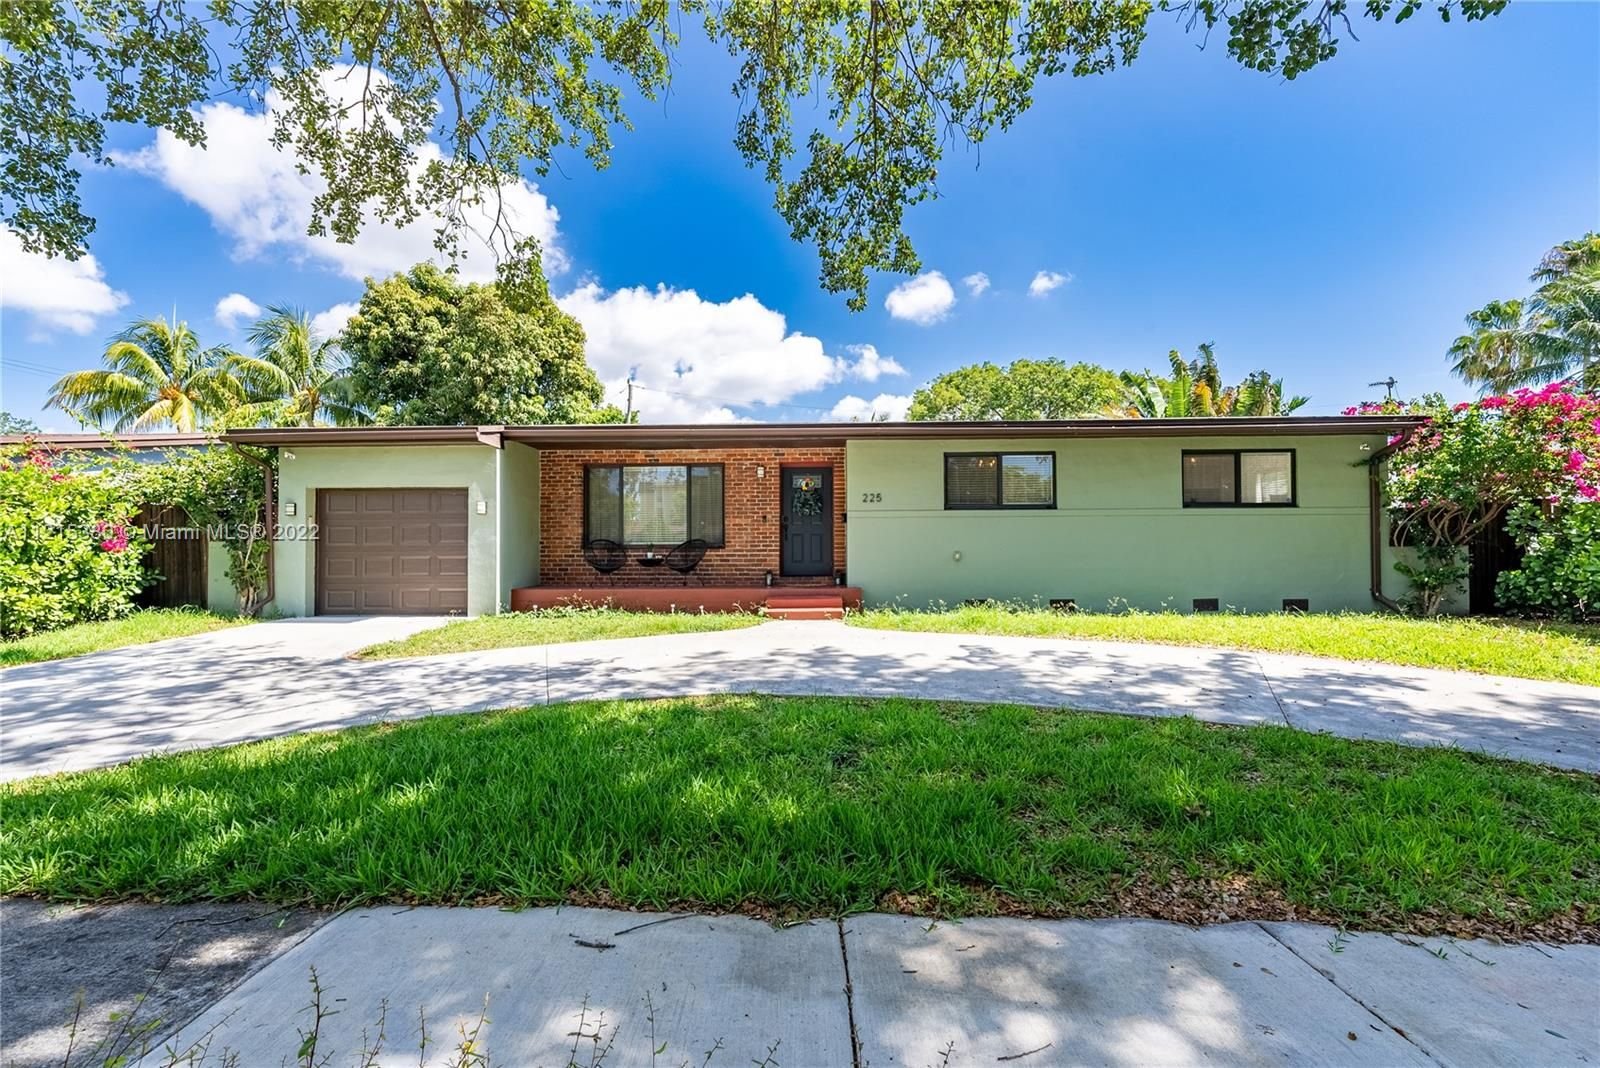 Real estate property located at 225 121st Ter, Miami-Dade County, North Miami, FL